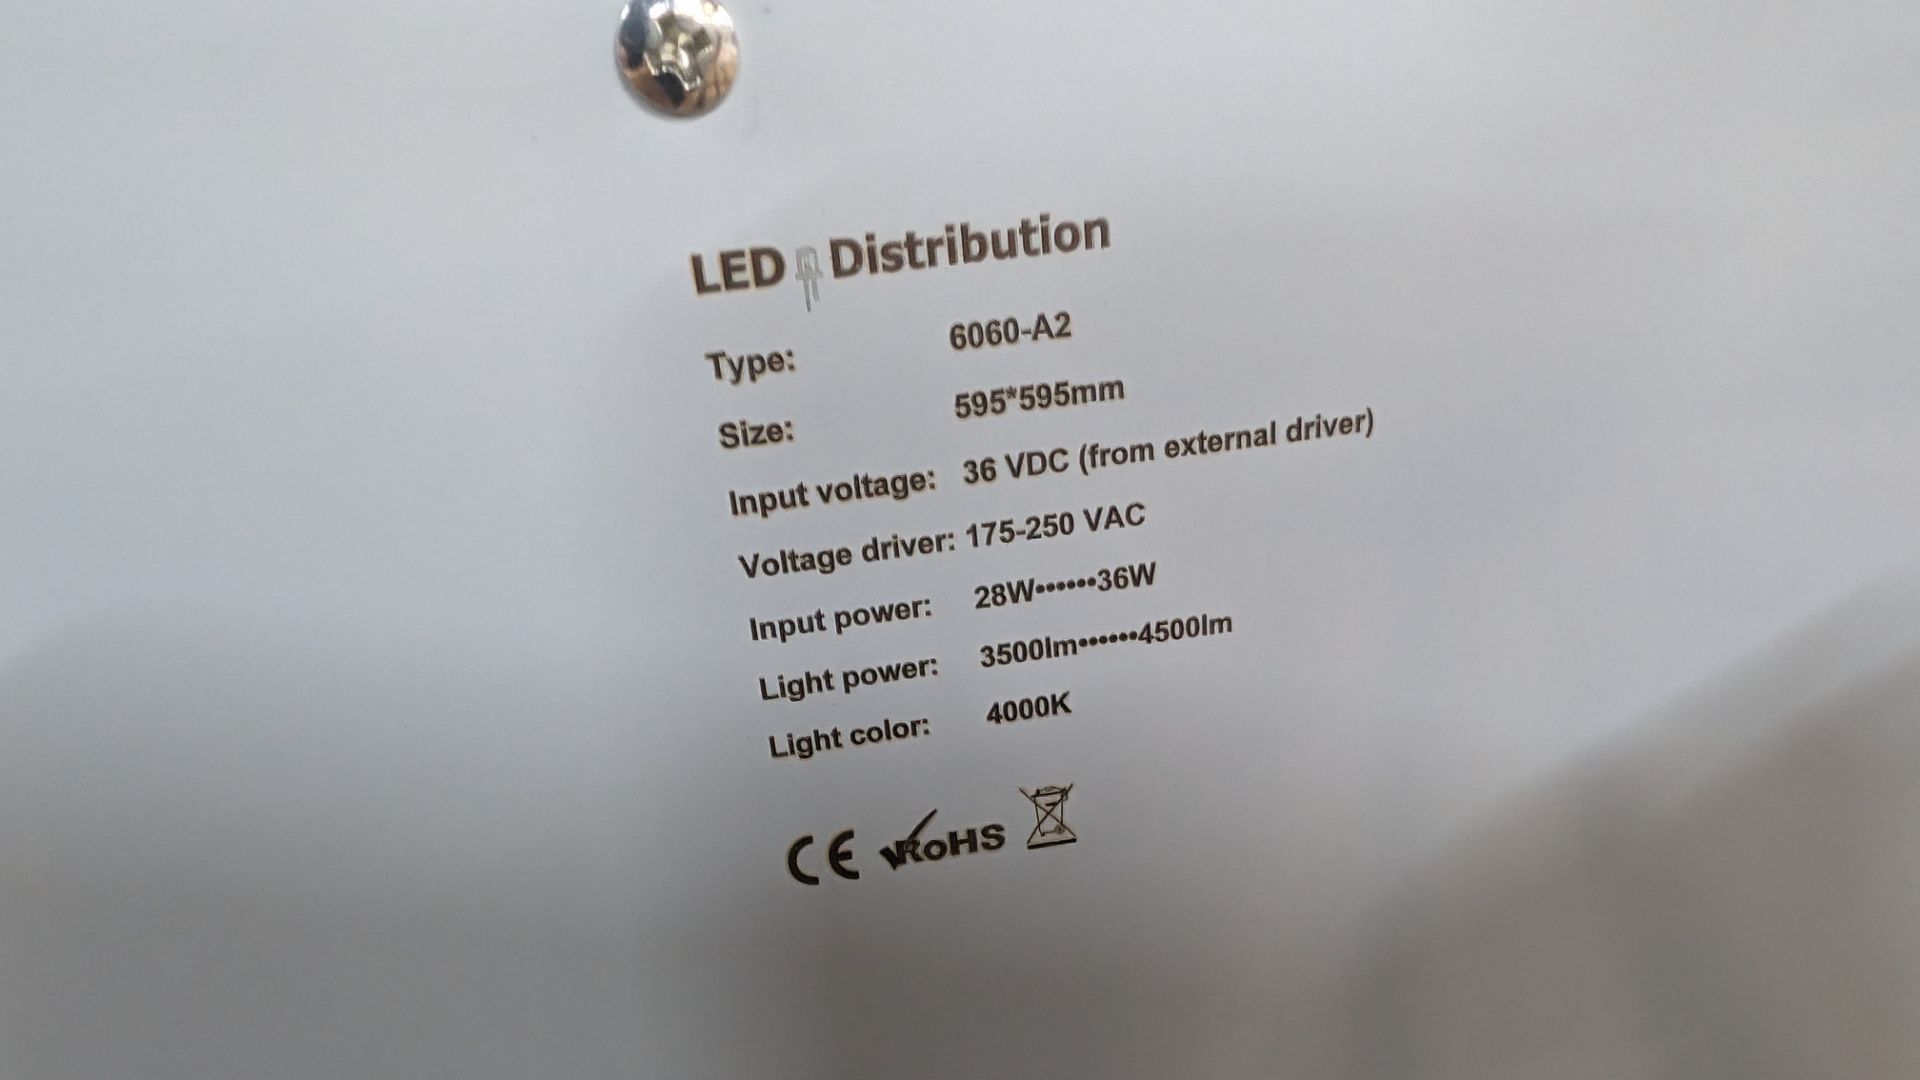 40 off Elegance Premium Eco 595mm x 595mm LED lighting panels. 4000k. 28/36w input power. 36w dri - Image 7 of 12